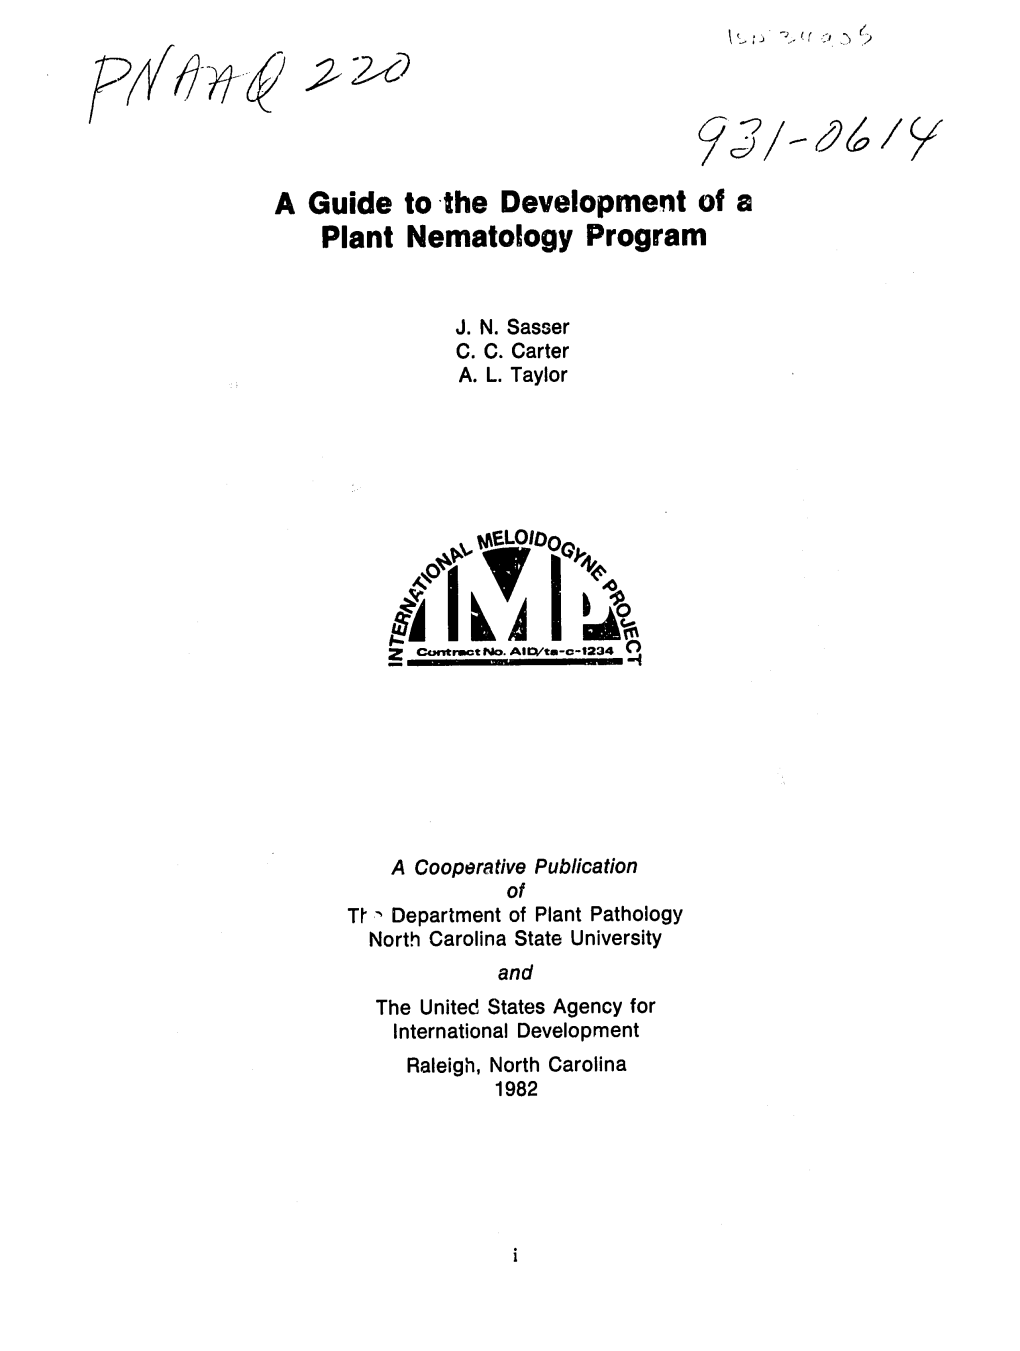 A Guide to the Development of a Plant Nematology Program